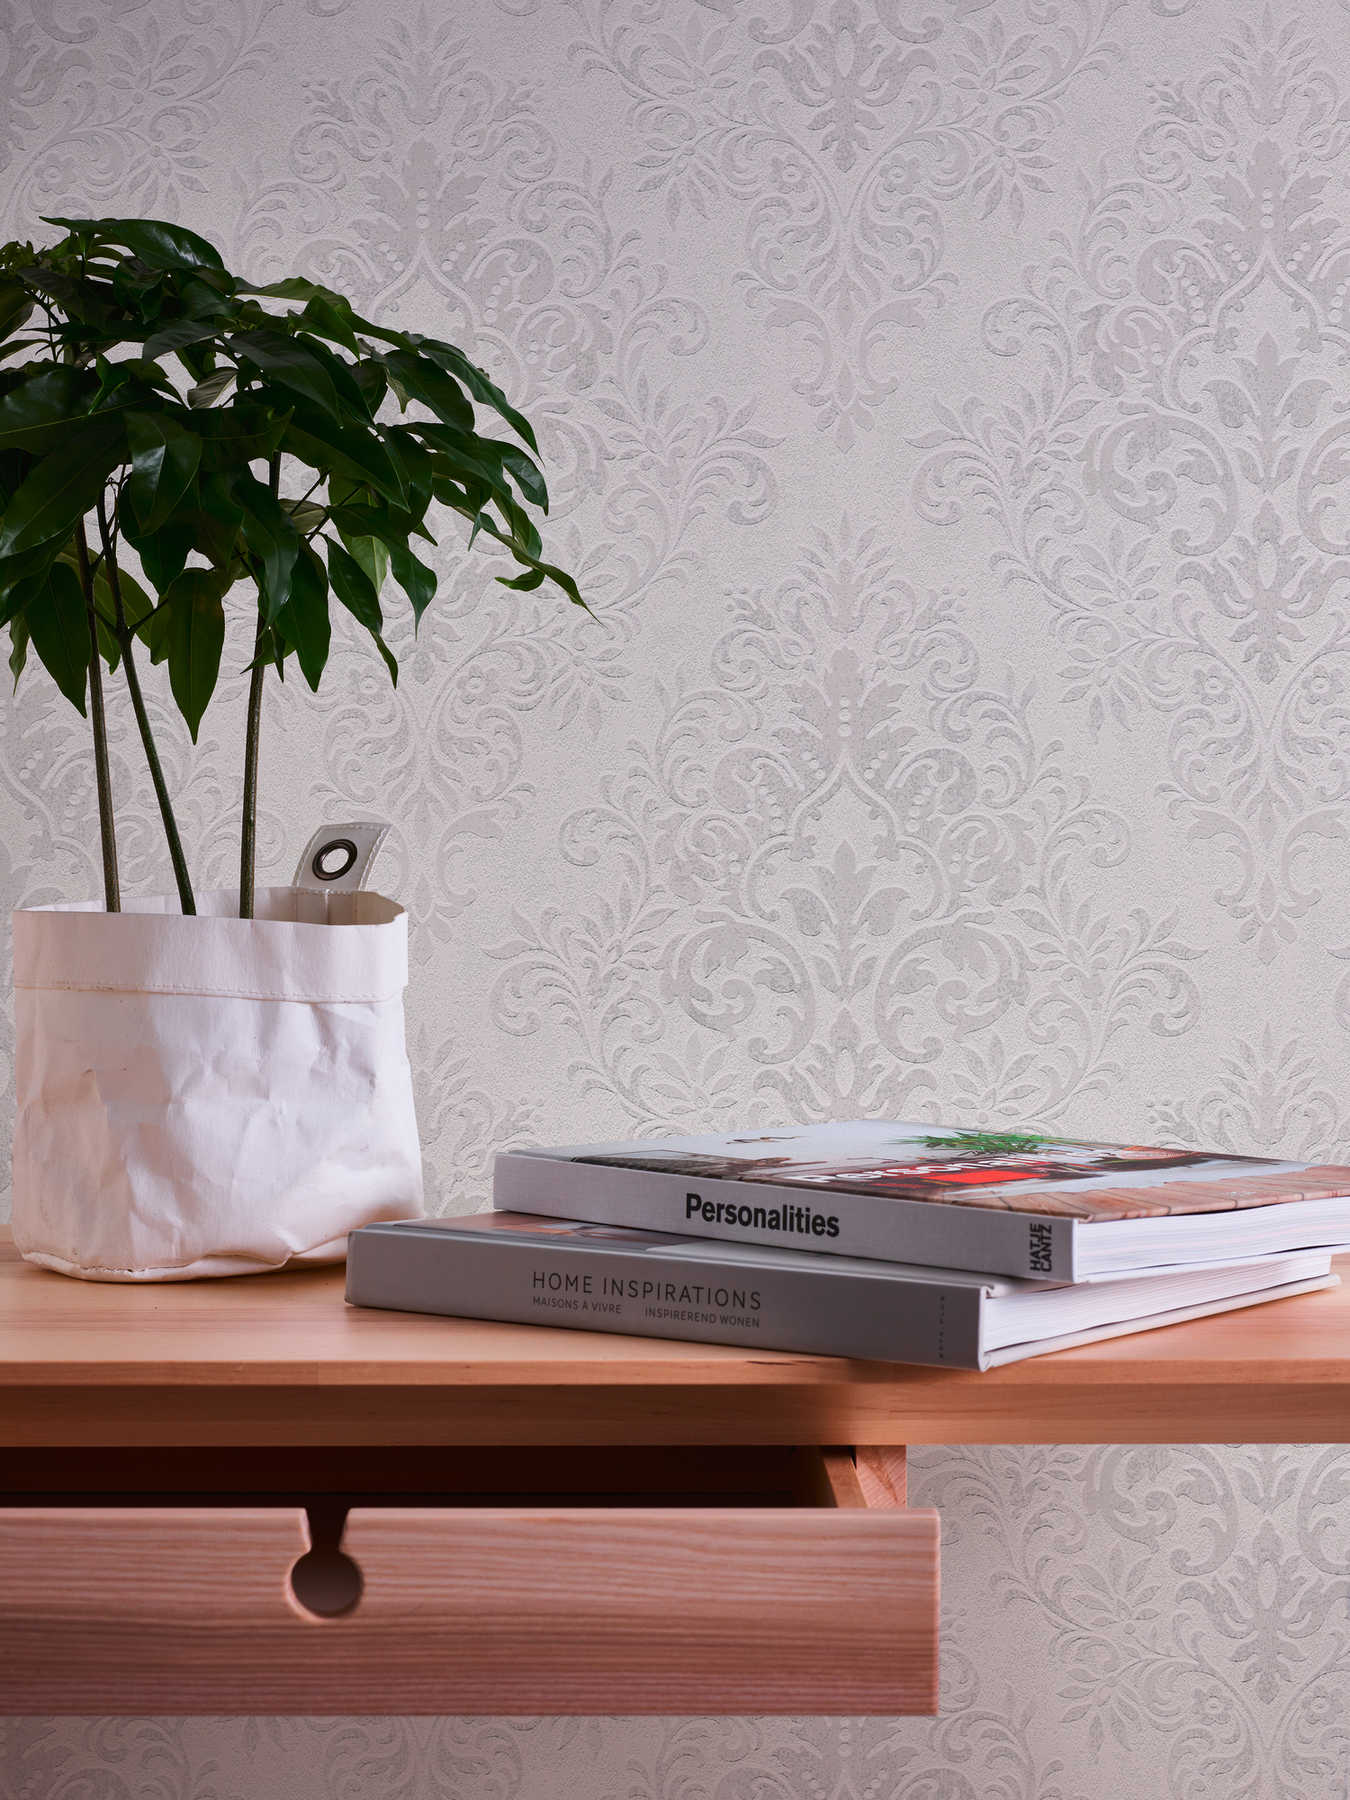             Non-woven wallpaper ornament design with metallic accents - grey
        